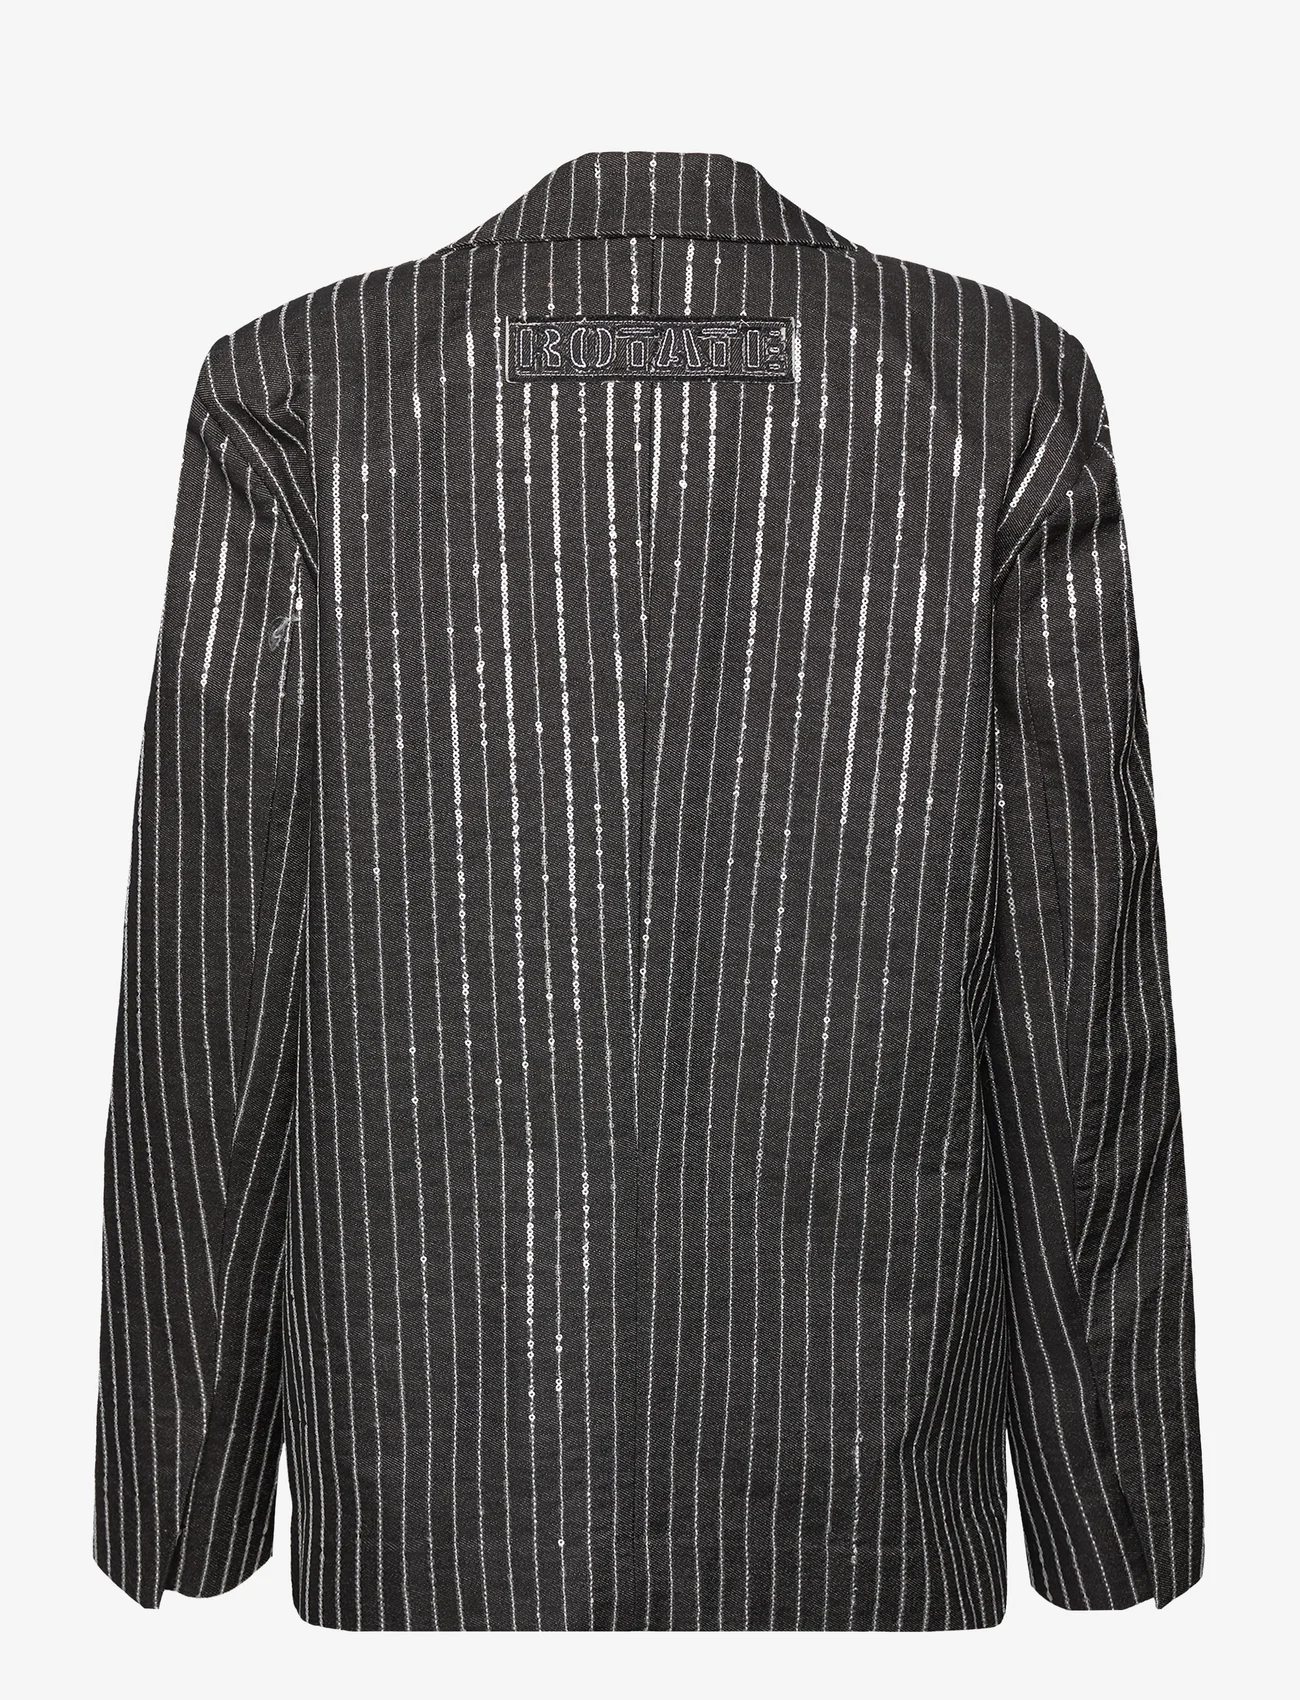 ROTATE Birger Christensen - Sequin Twill Blazer - party wear at outlet prices - black - 1